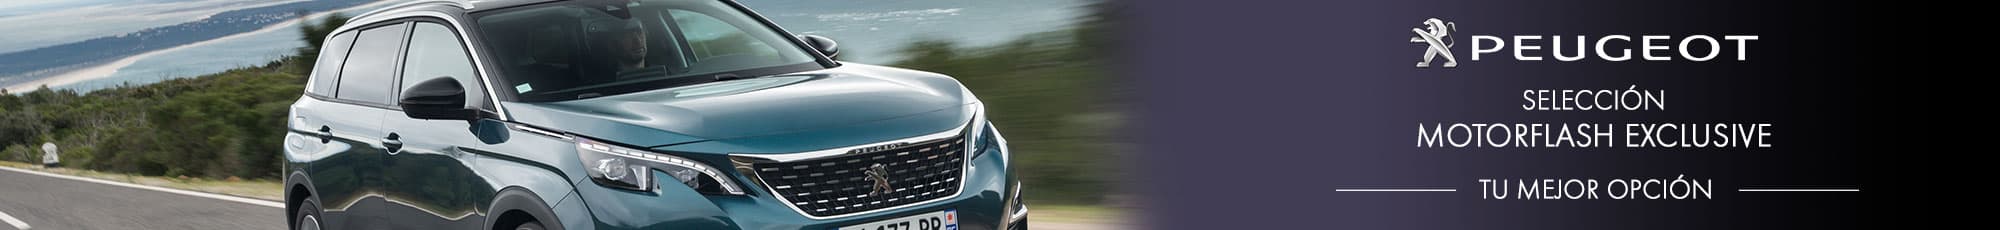 Motorflash exclusive de la marca Peugeot